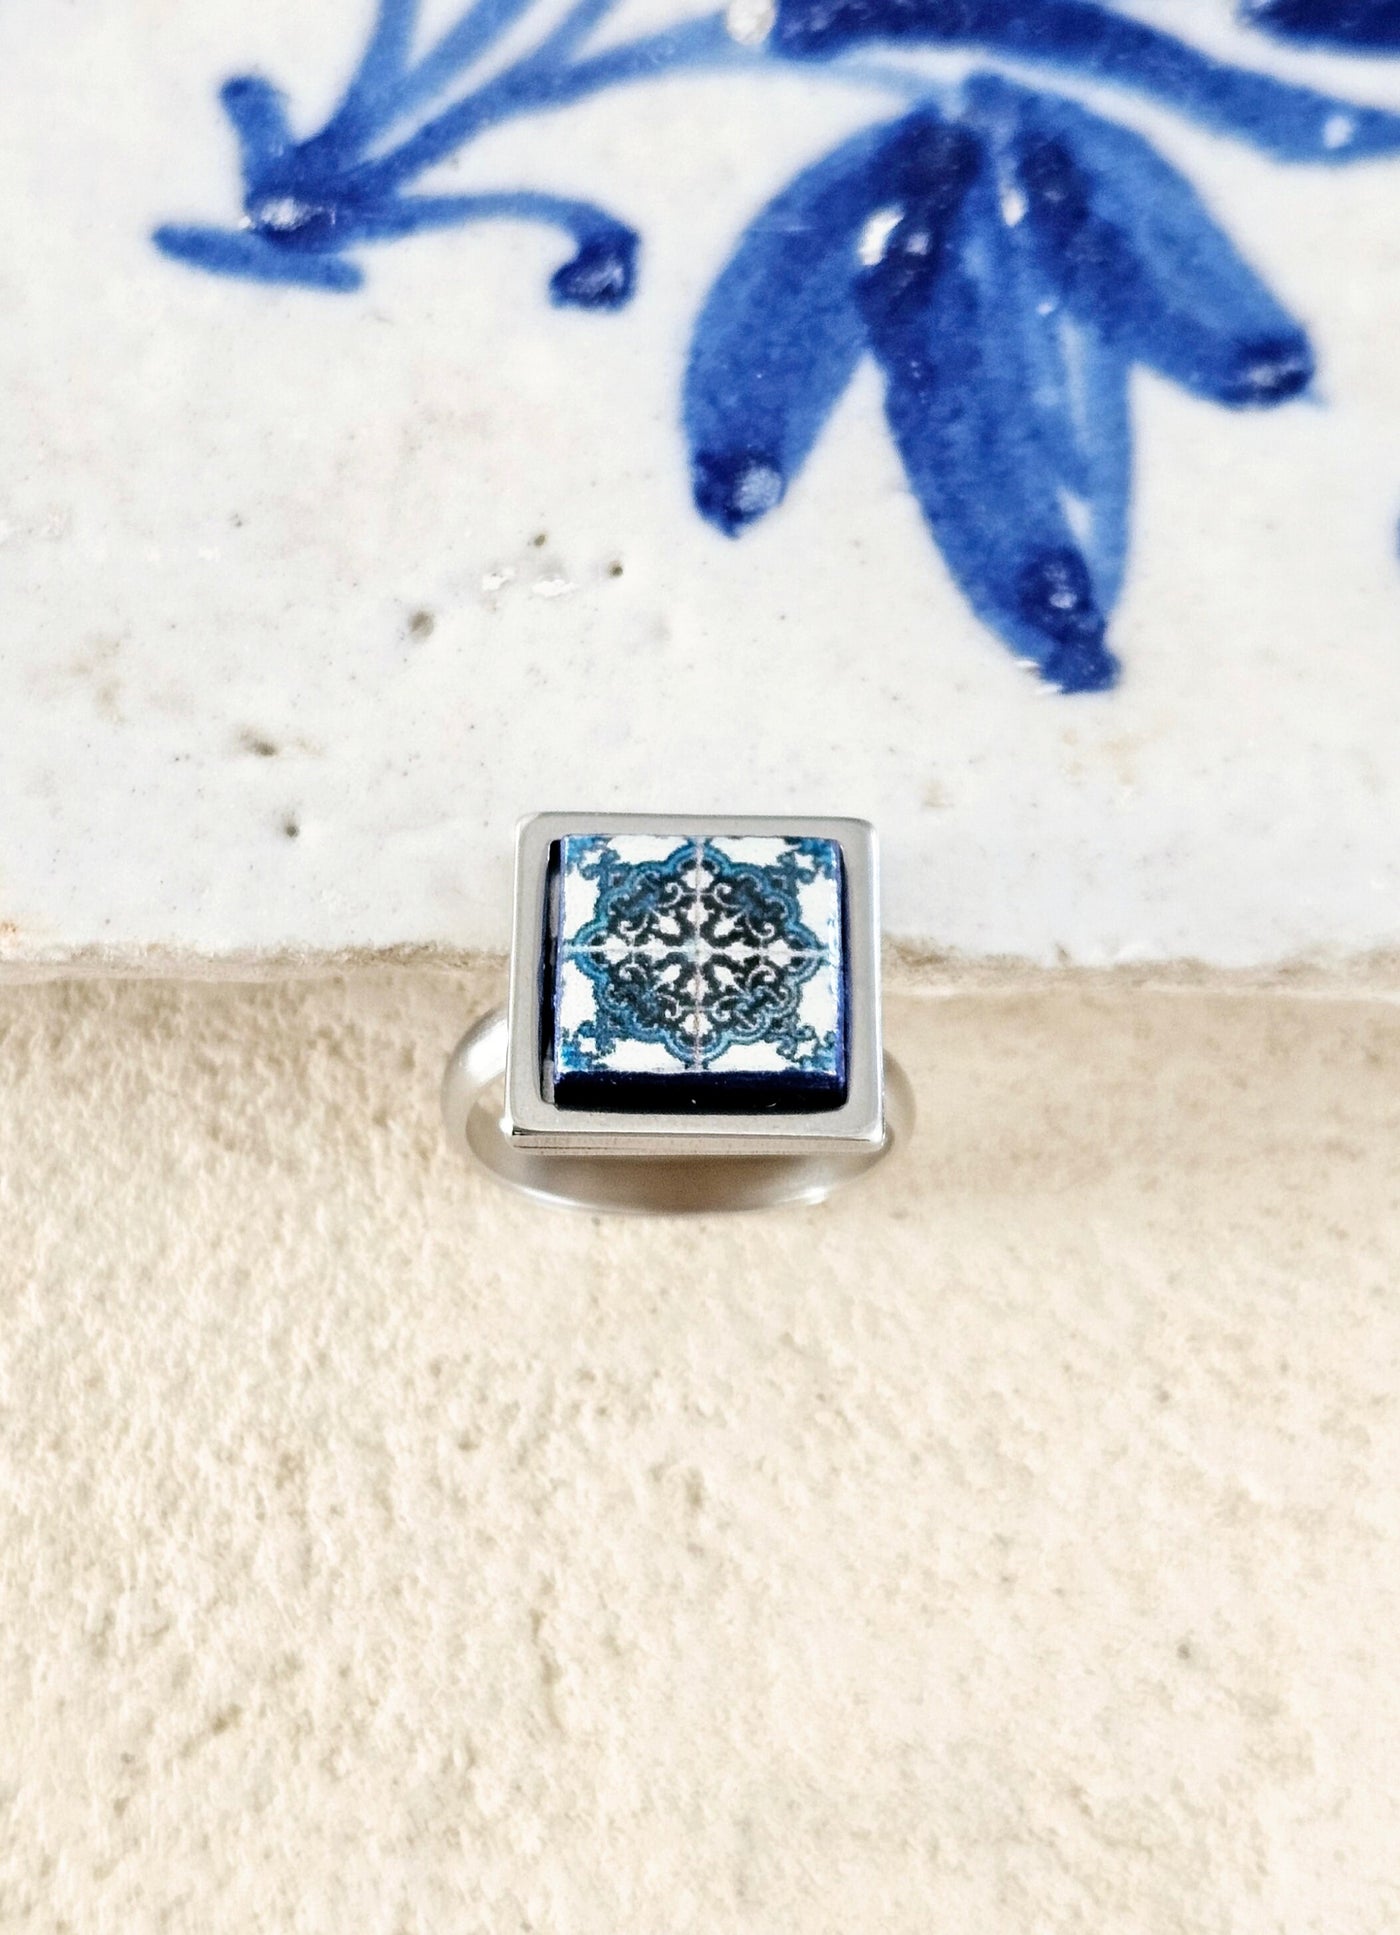 BLUE Portugal Tile Silver STEEL Ring Portuguese Square Azulejo Ring Antique Adjustable Vintage Majolica Spanish Mosaic Tile Women Ring Gift